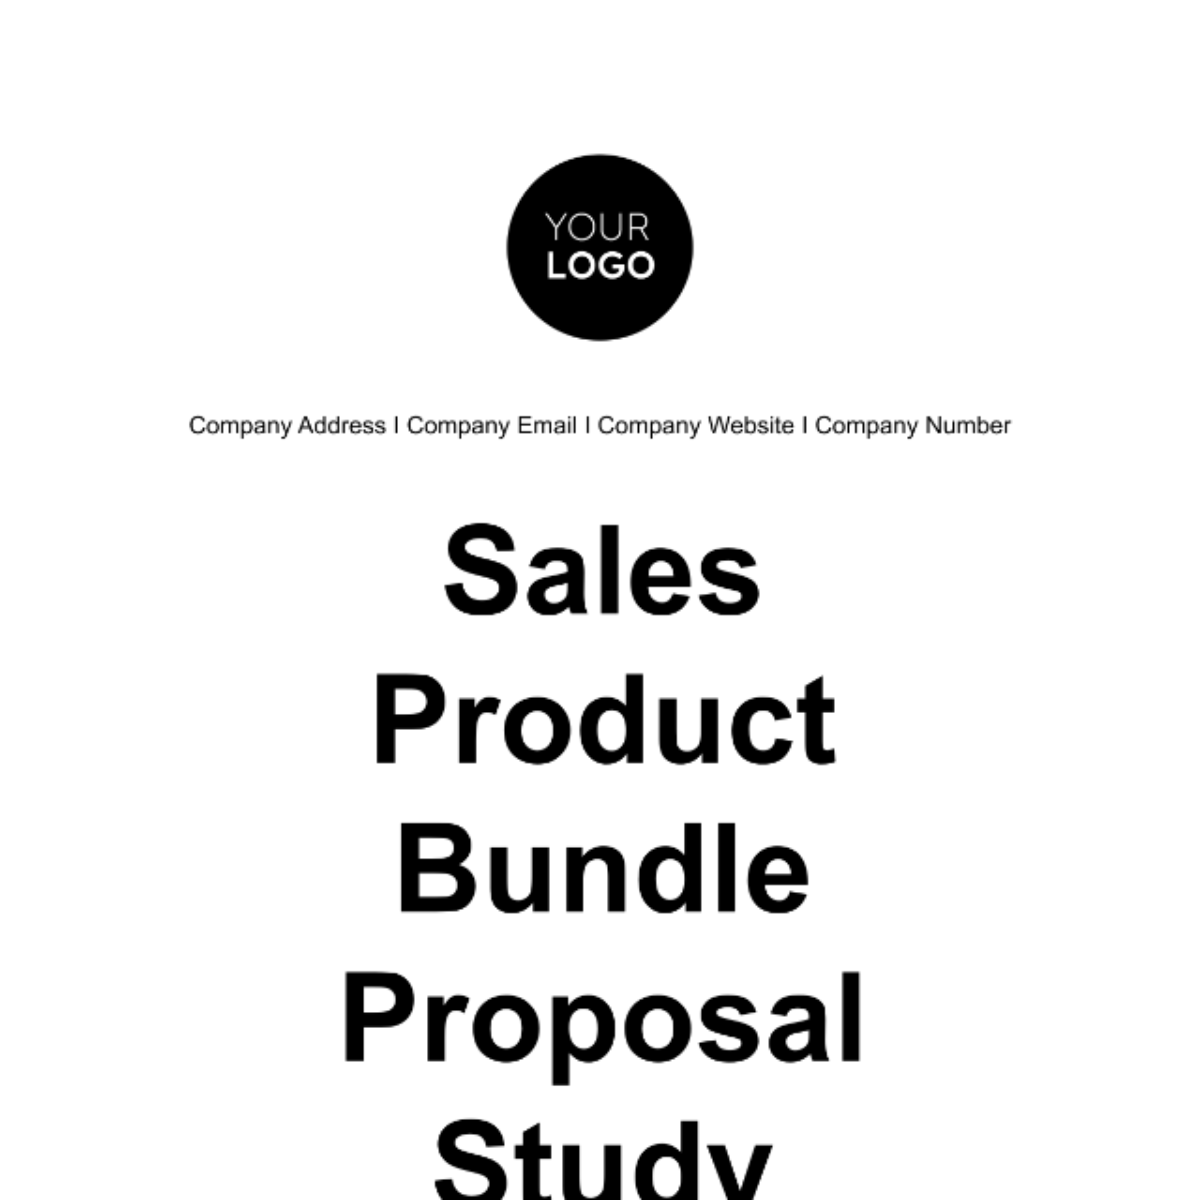 Free Sales Product Bundle Proposal Study Template